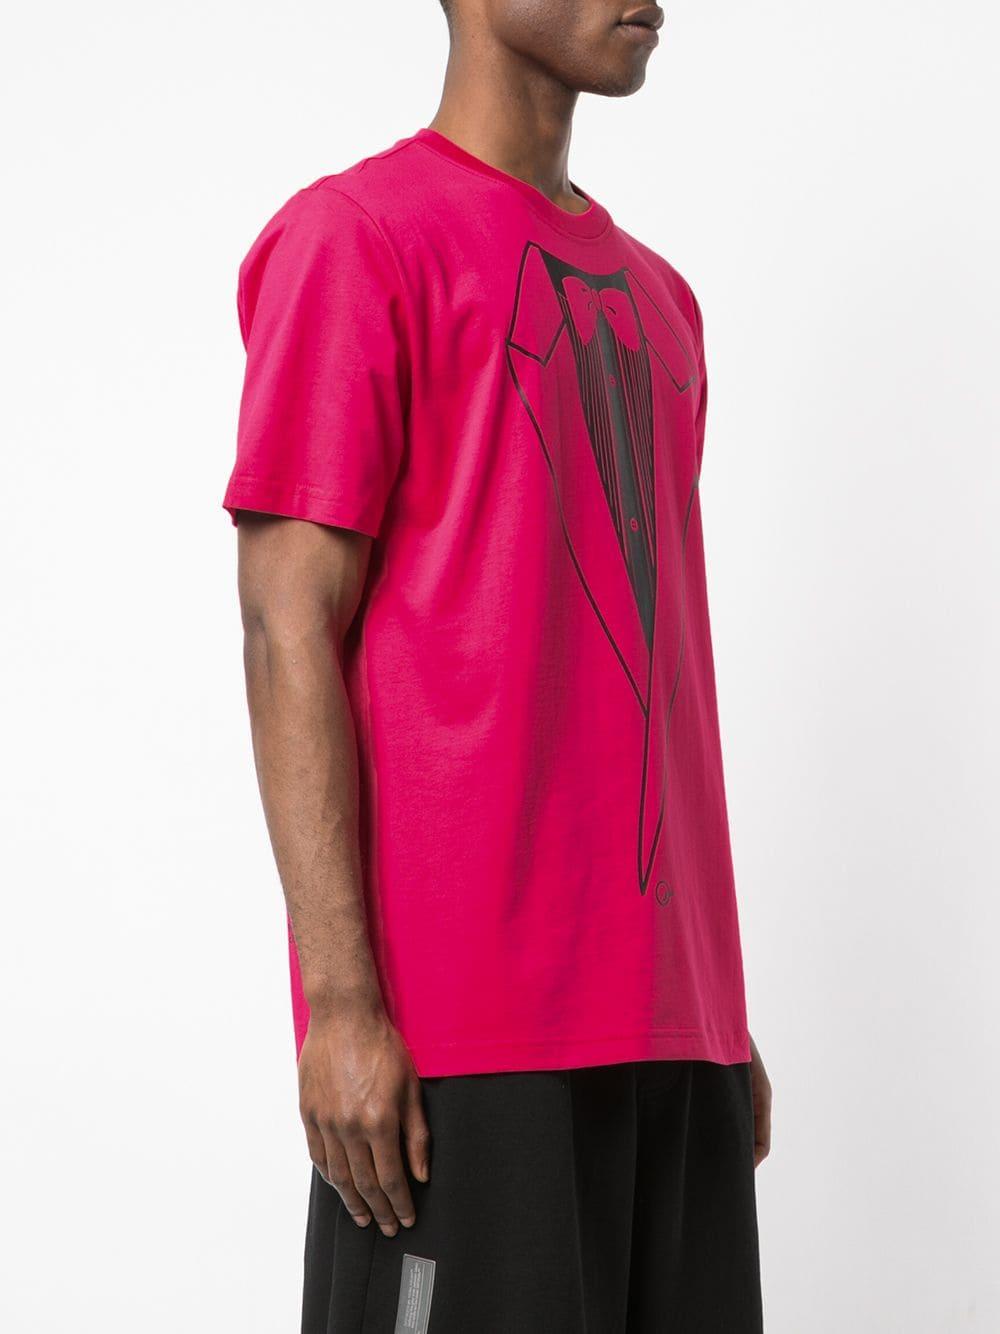 Exactamente no relacionado pecho Camiseta x Off-White NRG A6 Nike de hombre de color Rosa | Lyst